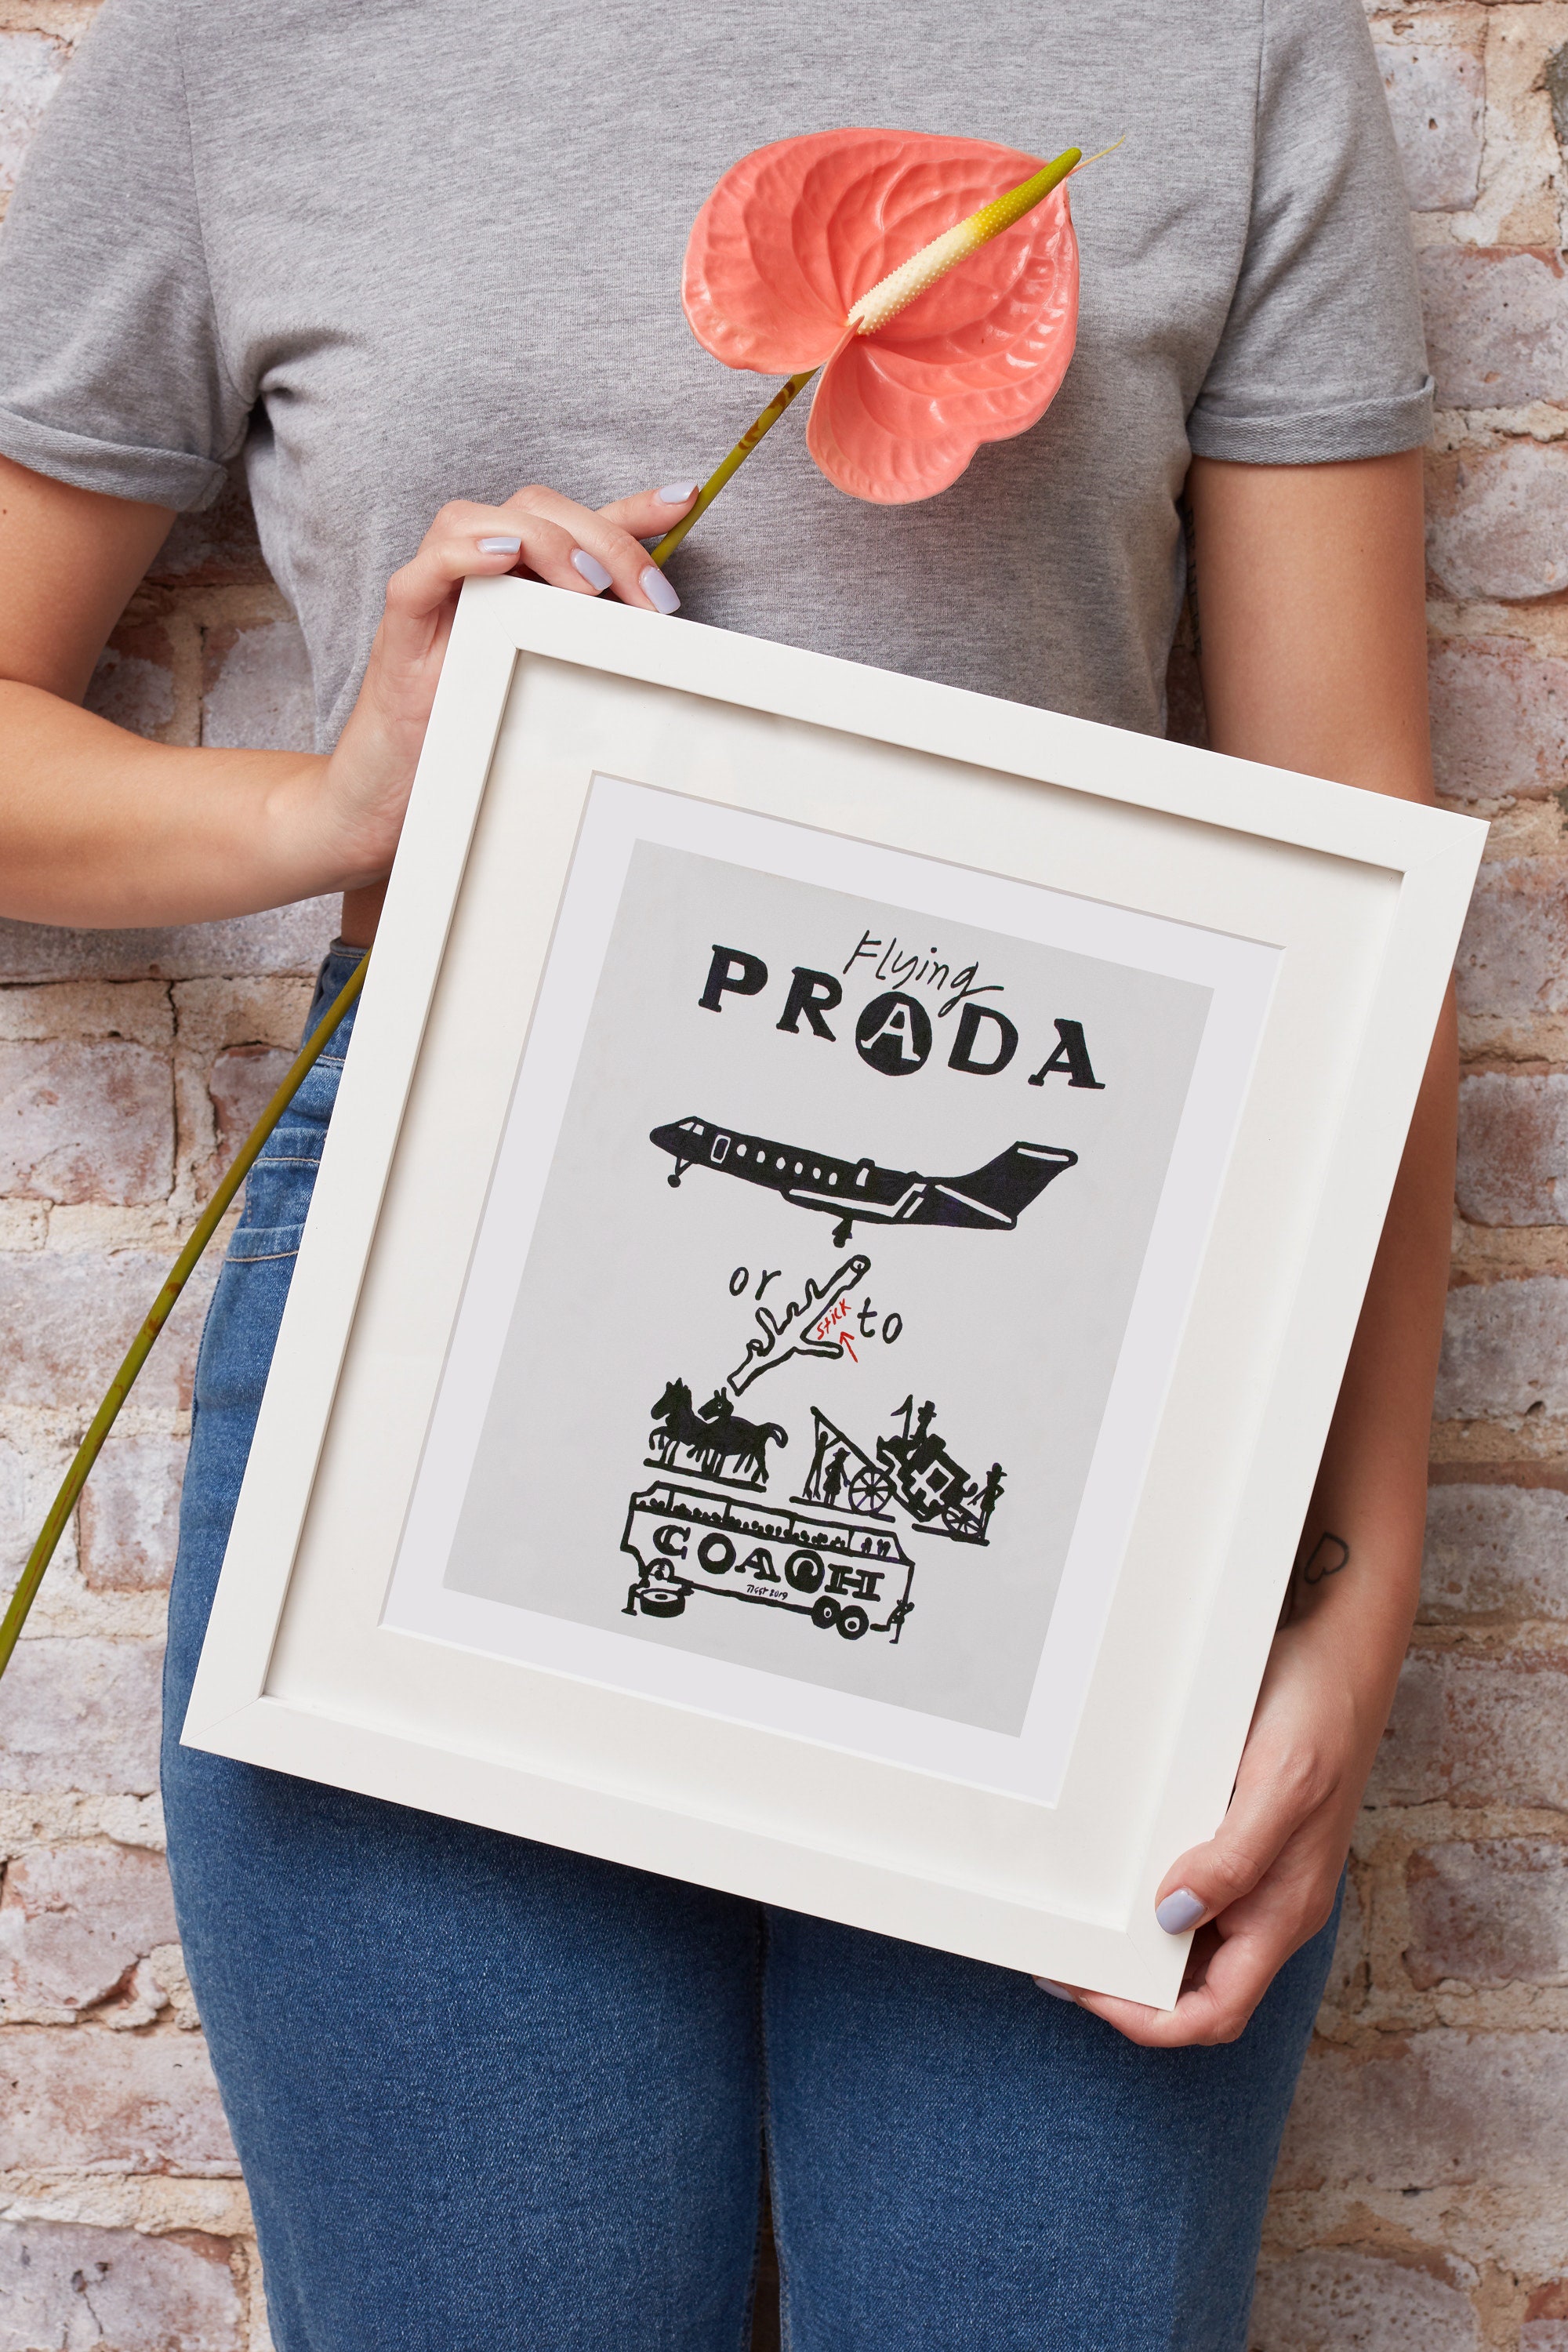 Flying Prada or Stick to Coach Giclee Print Art Print - Etsy